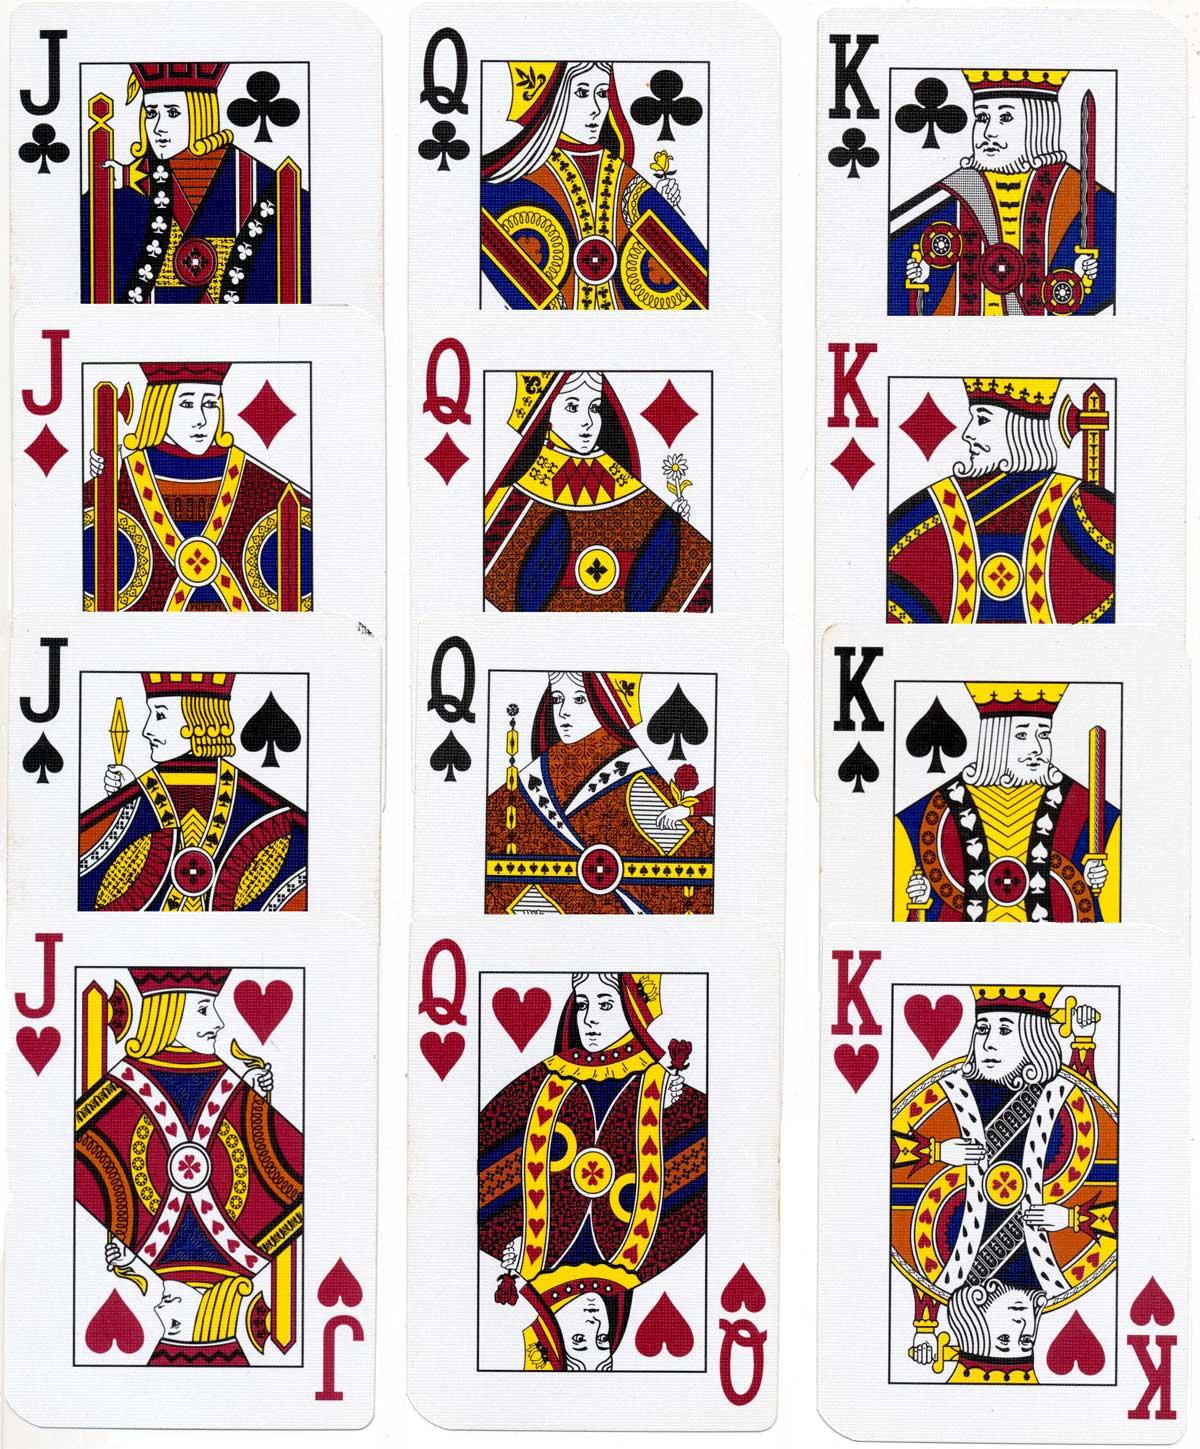 Closed Casino Gemaco Hooters Casino Las Vegas Playing Cards 2 Colors 2 Decks 